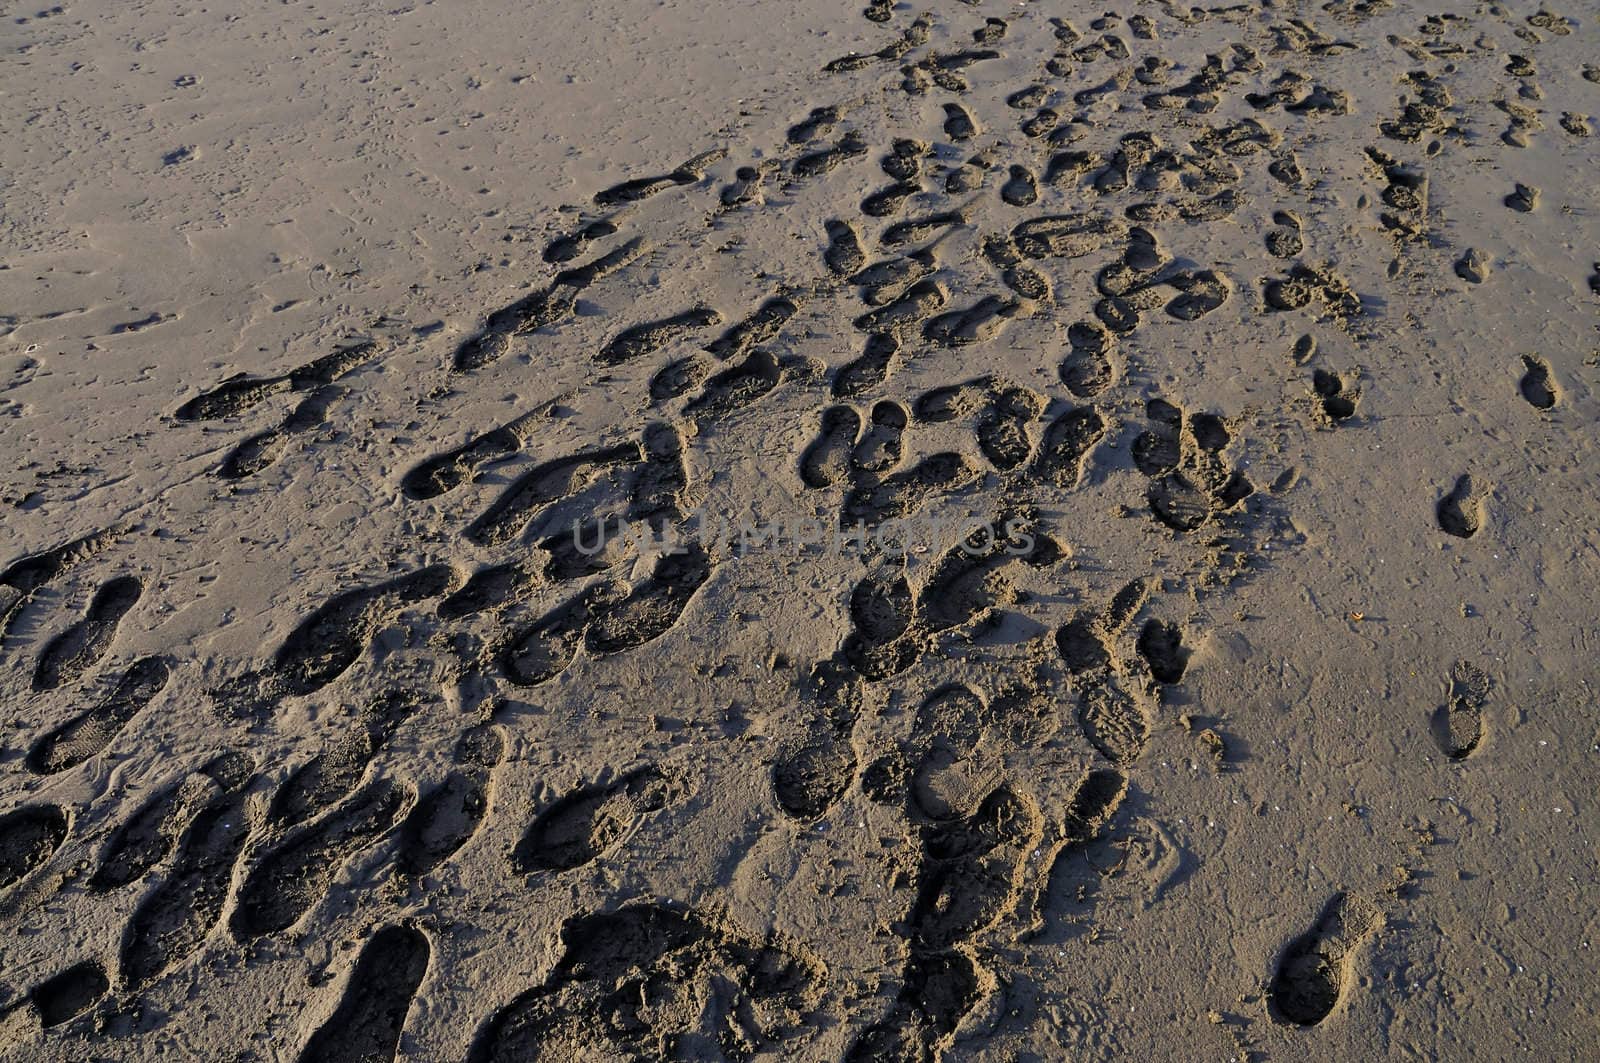 Foot prints on a sandy beach by Sevaljevic